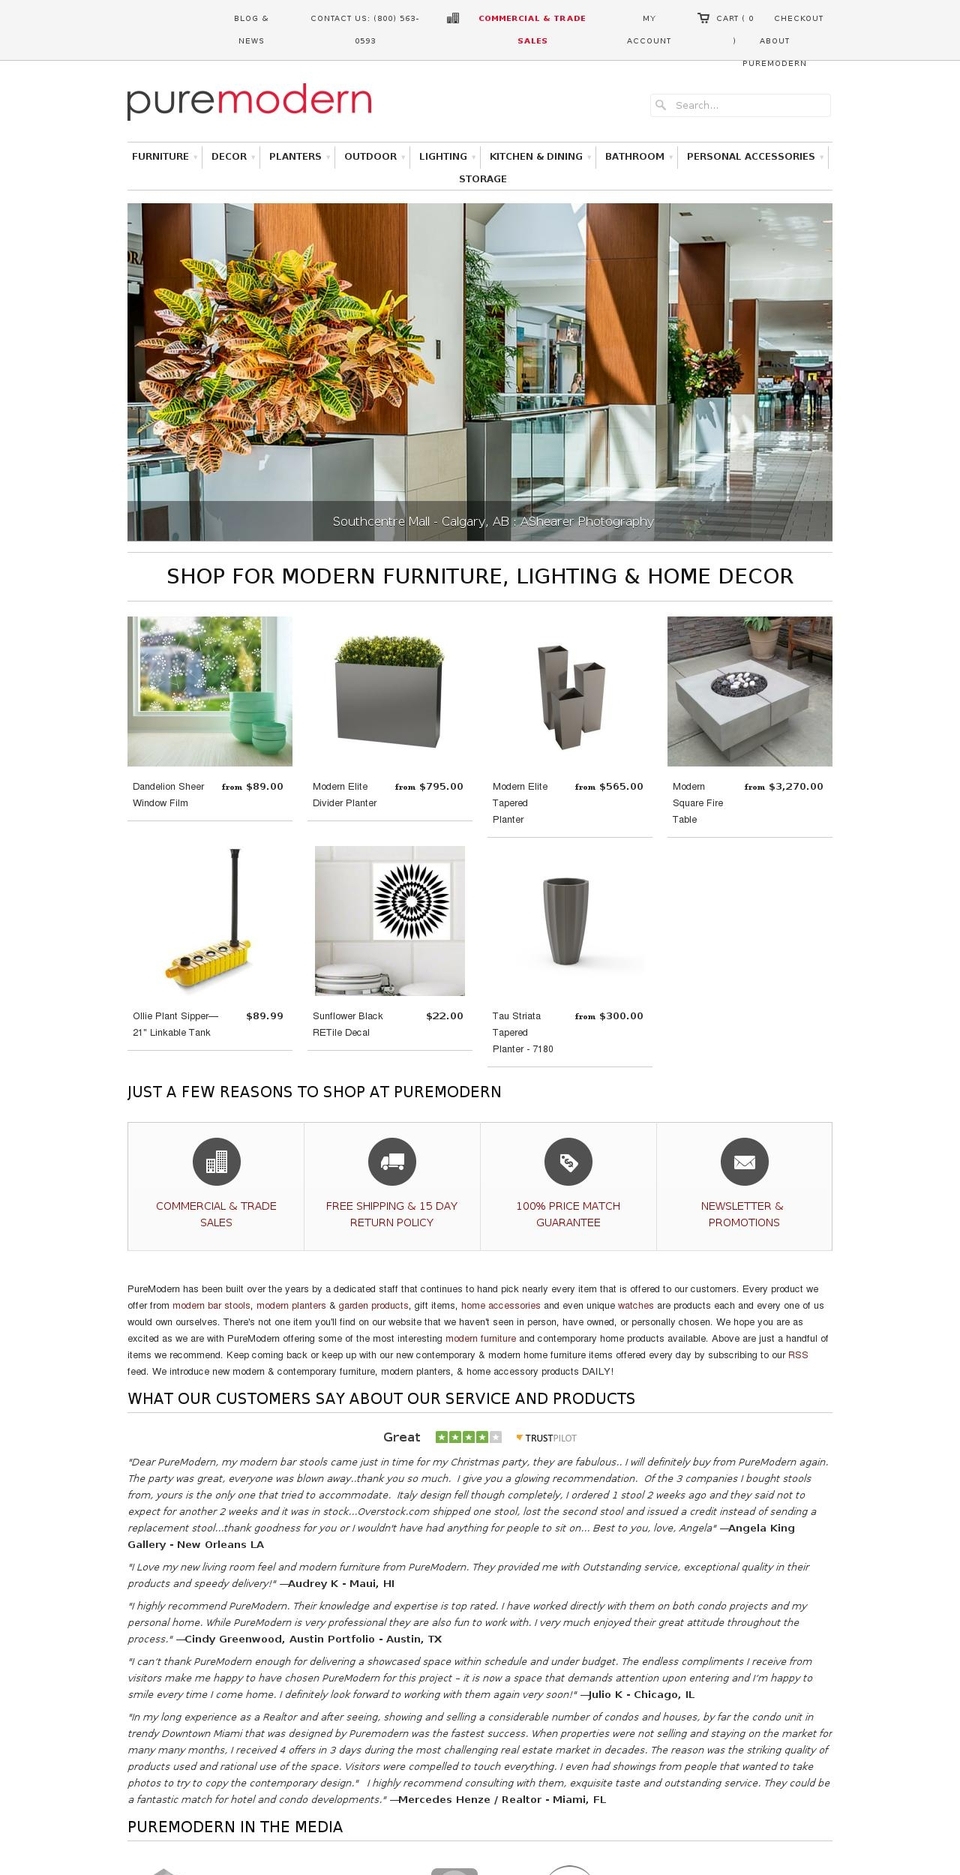 Mode Shopify theme site example puremodern.com